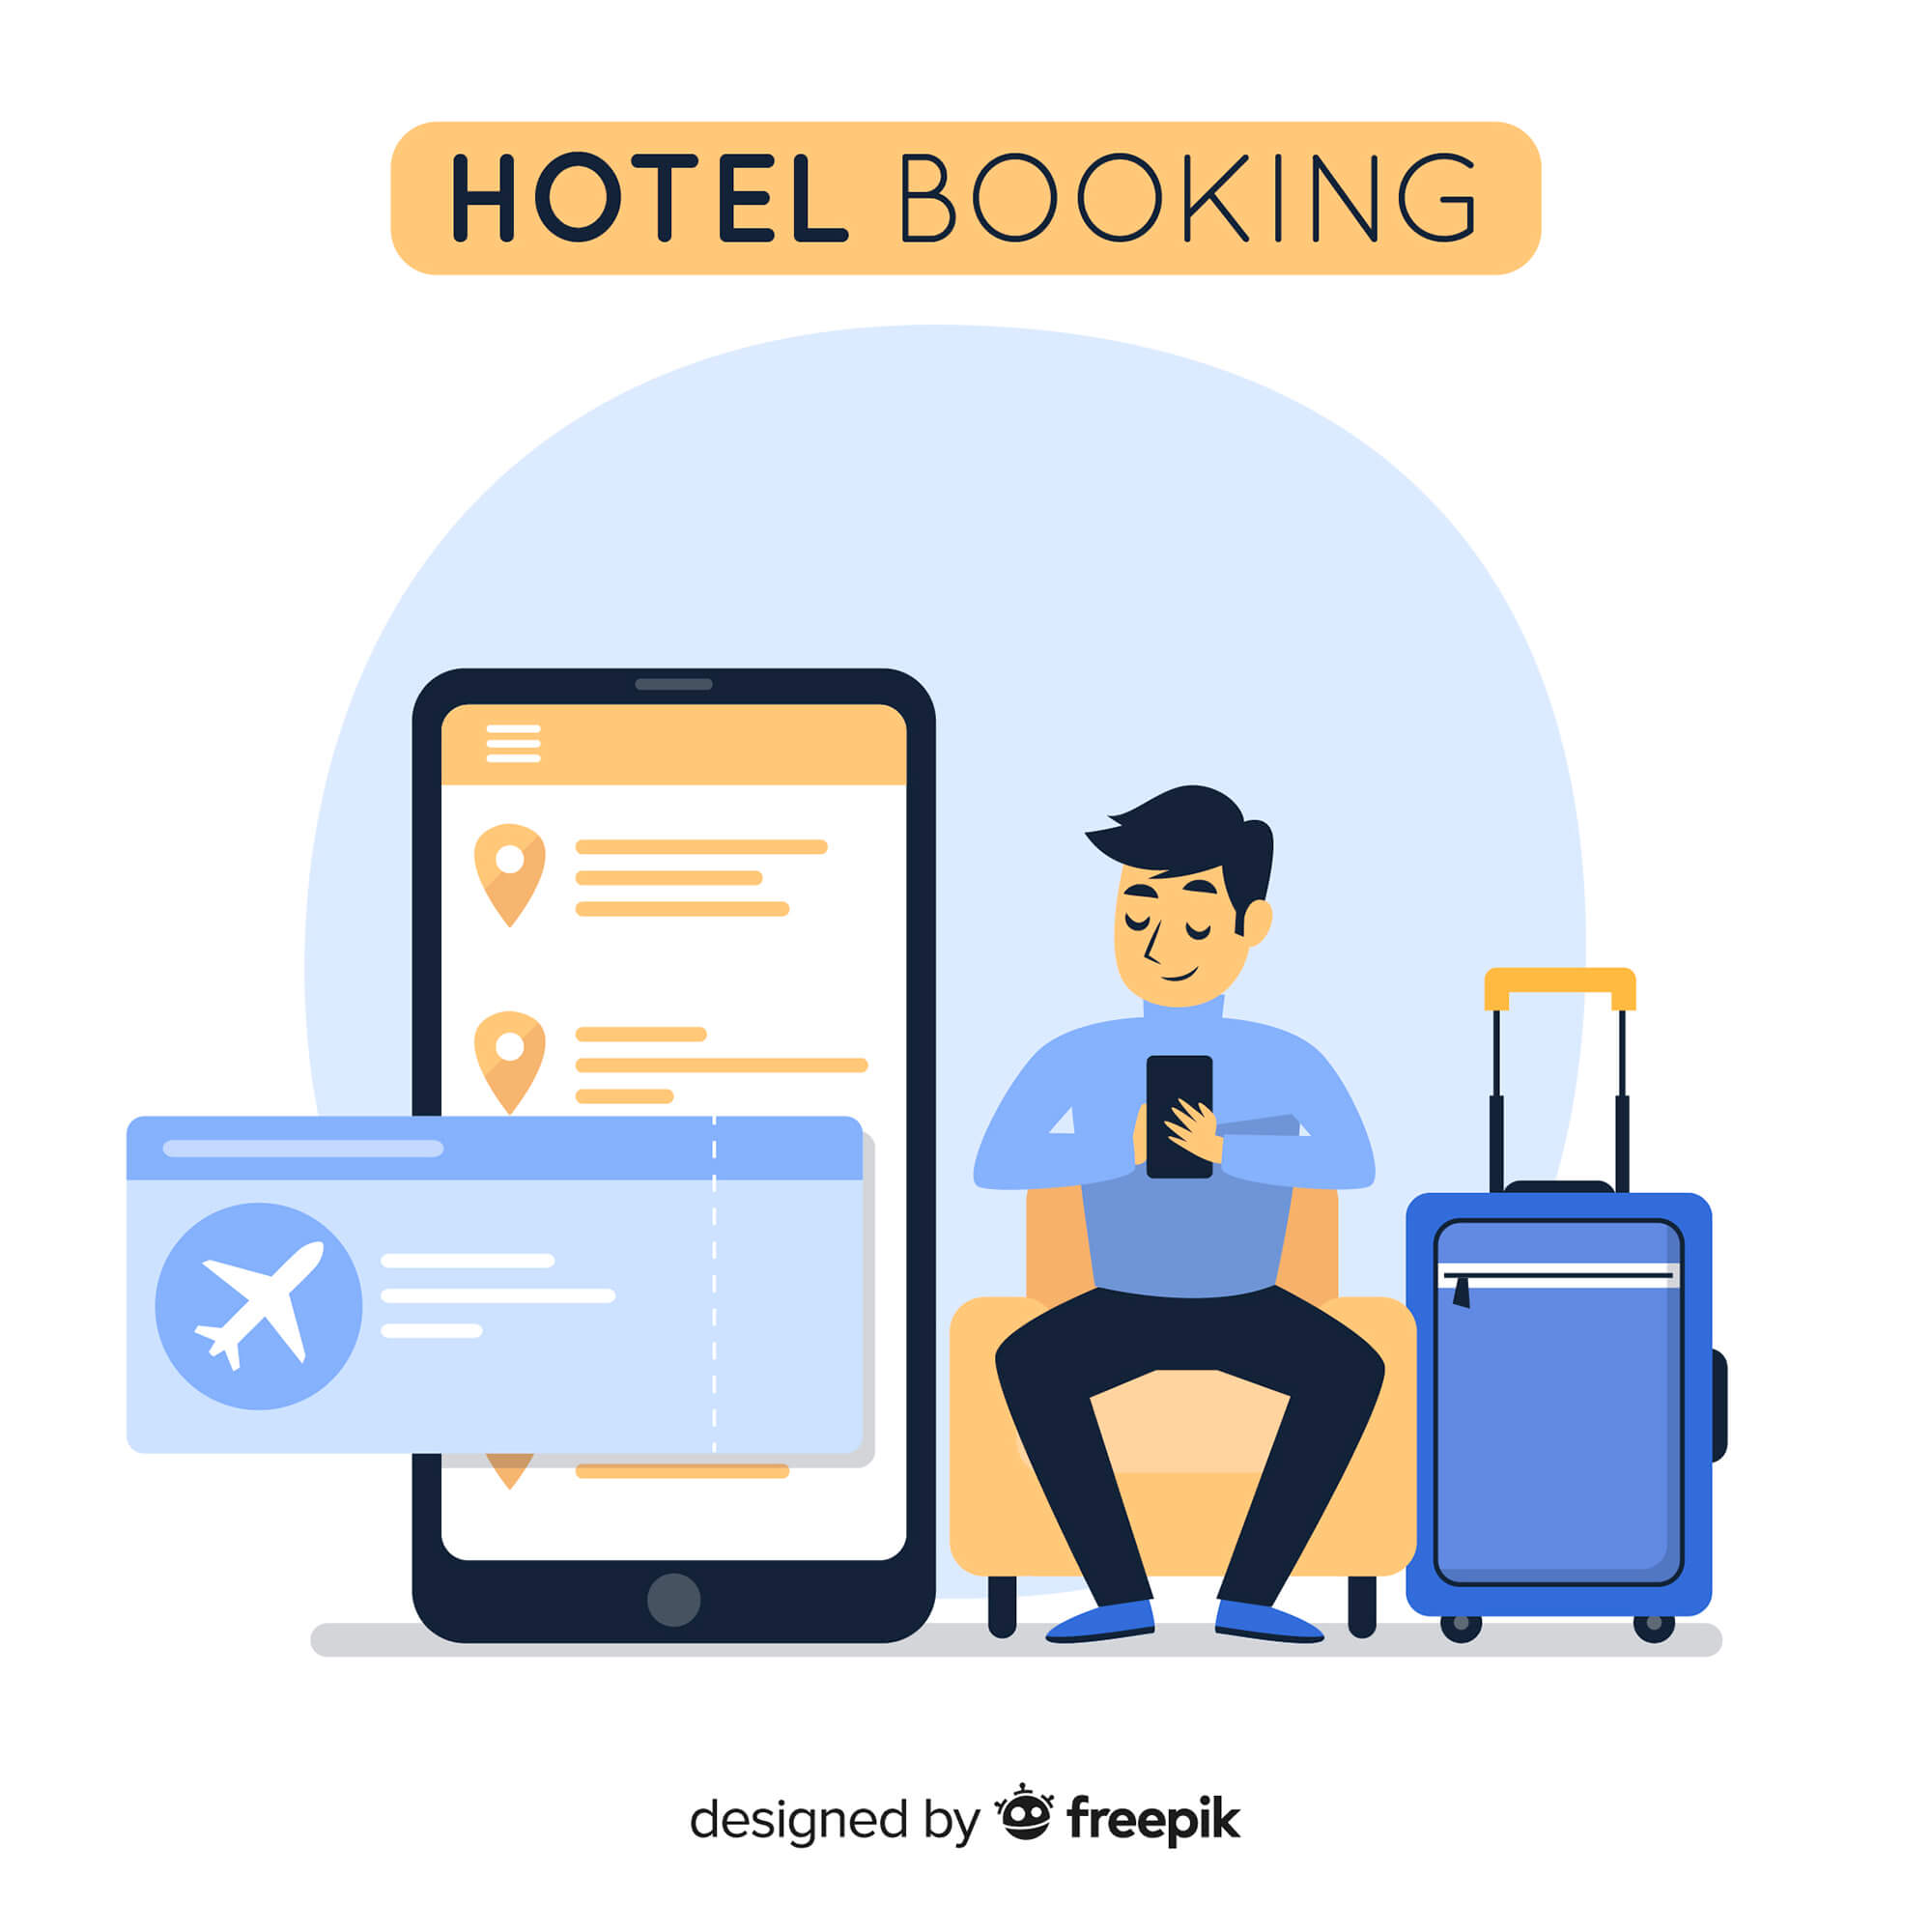 Worldwide Hotel Booking